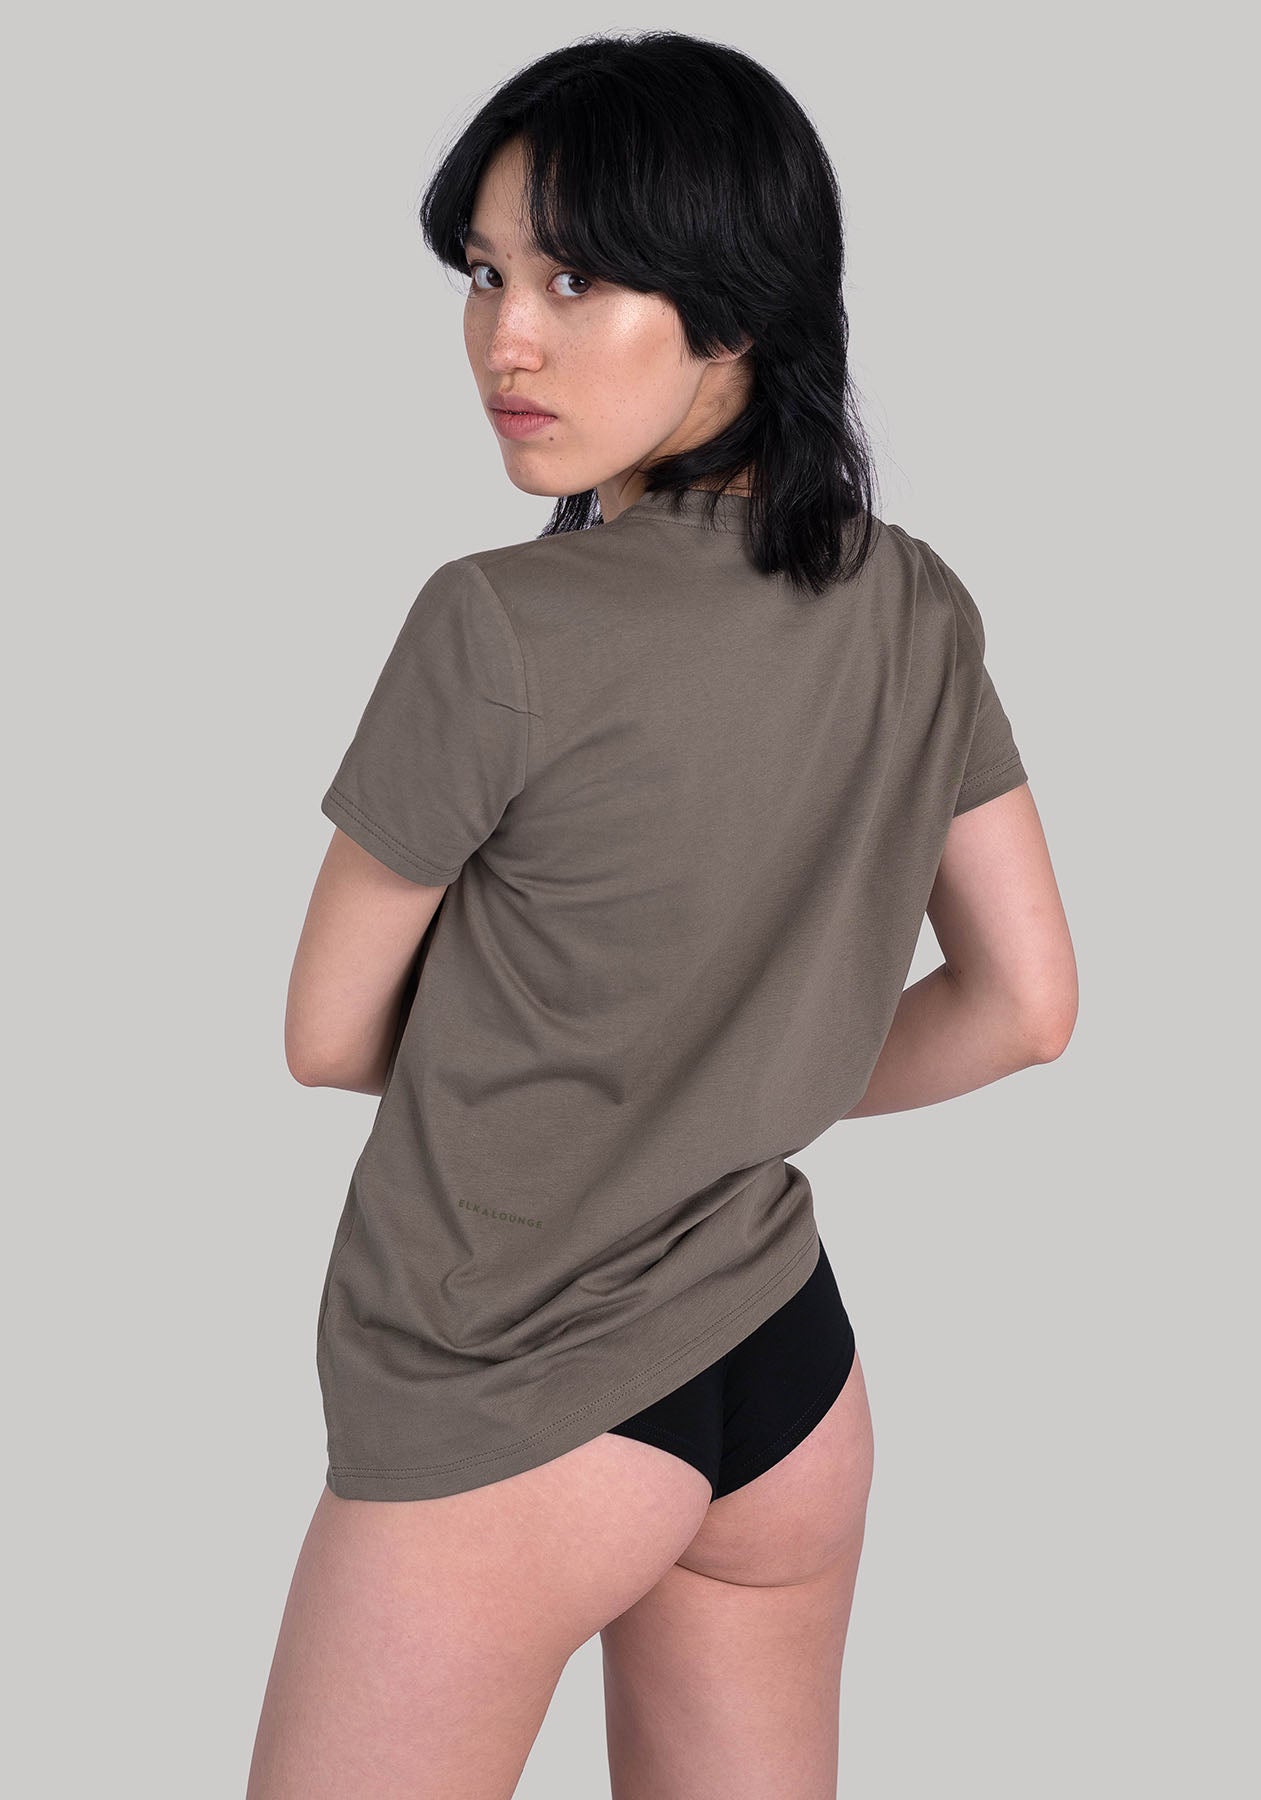 Women t-shirt organic cotton Burnt olive tone-in-tone - ethically made Minimalist - regular